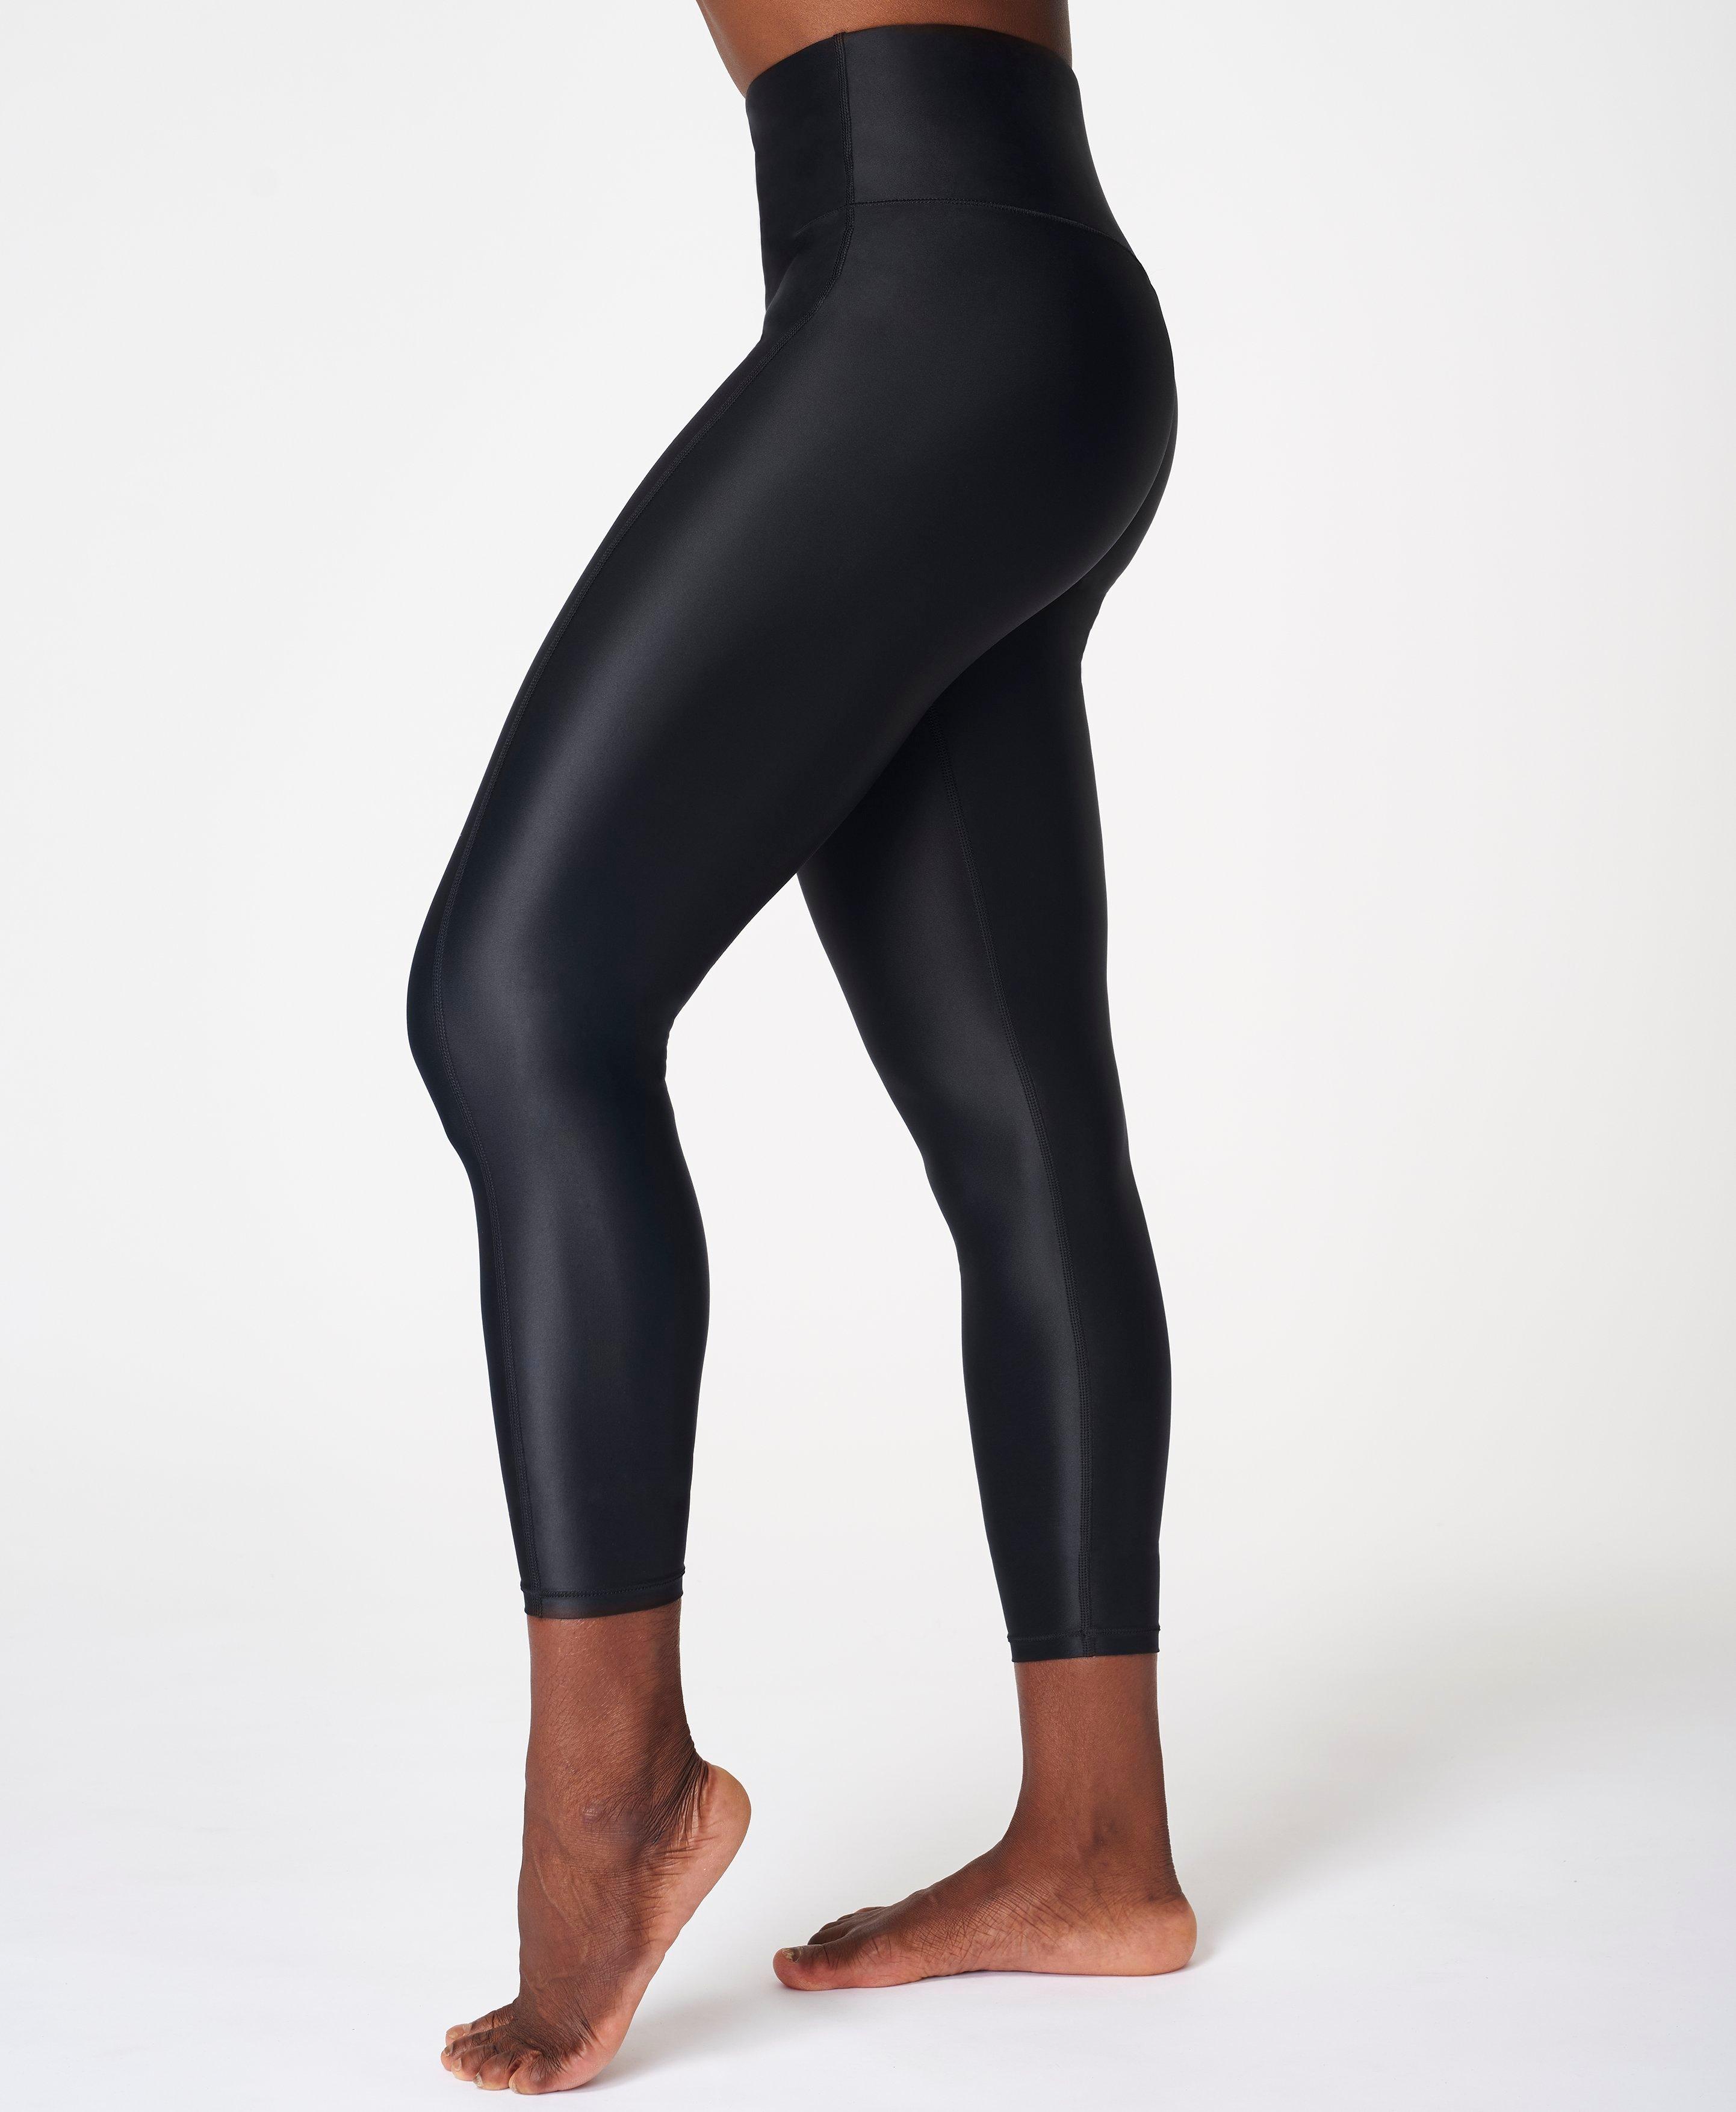 shiny black yoga leggings